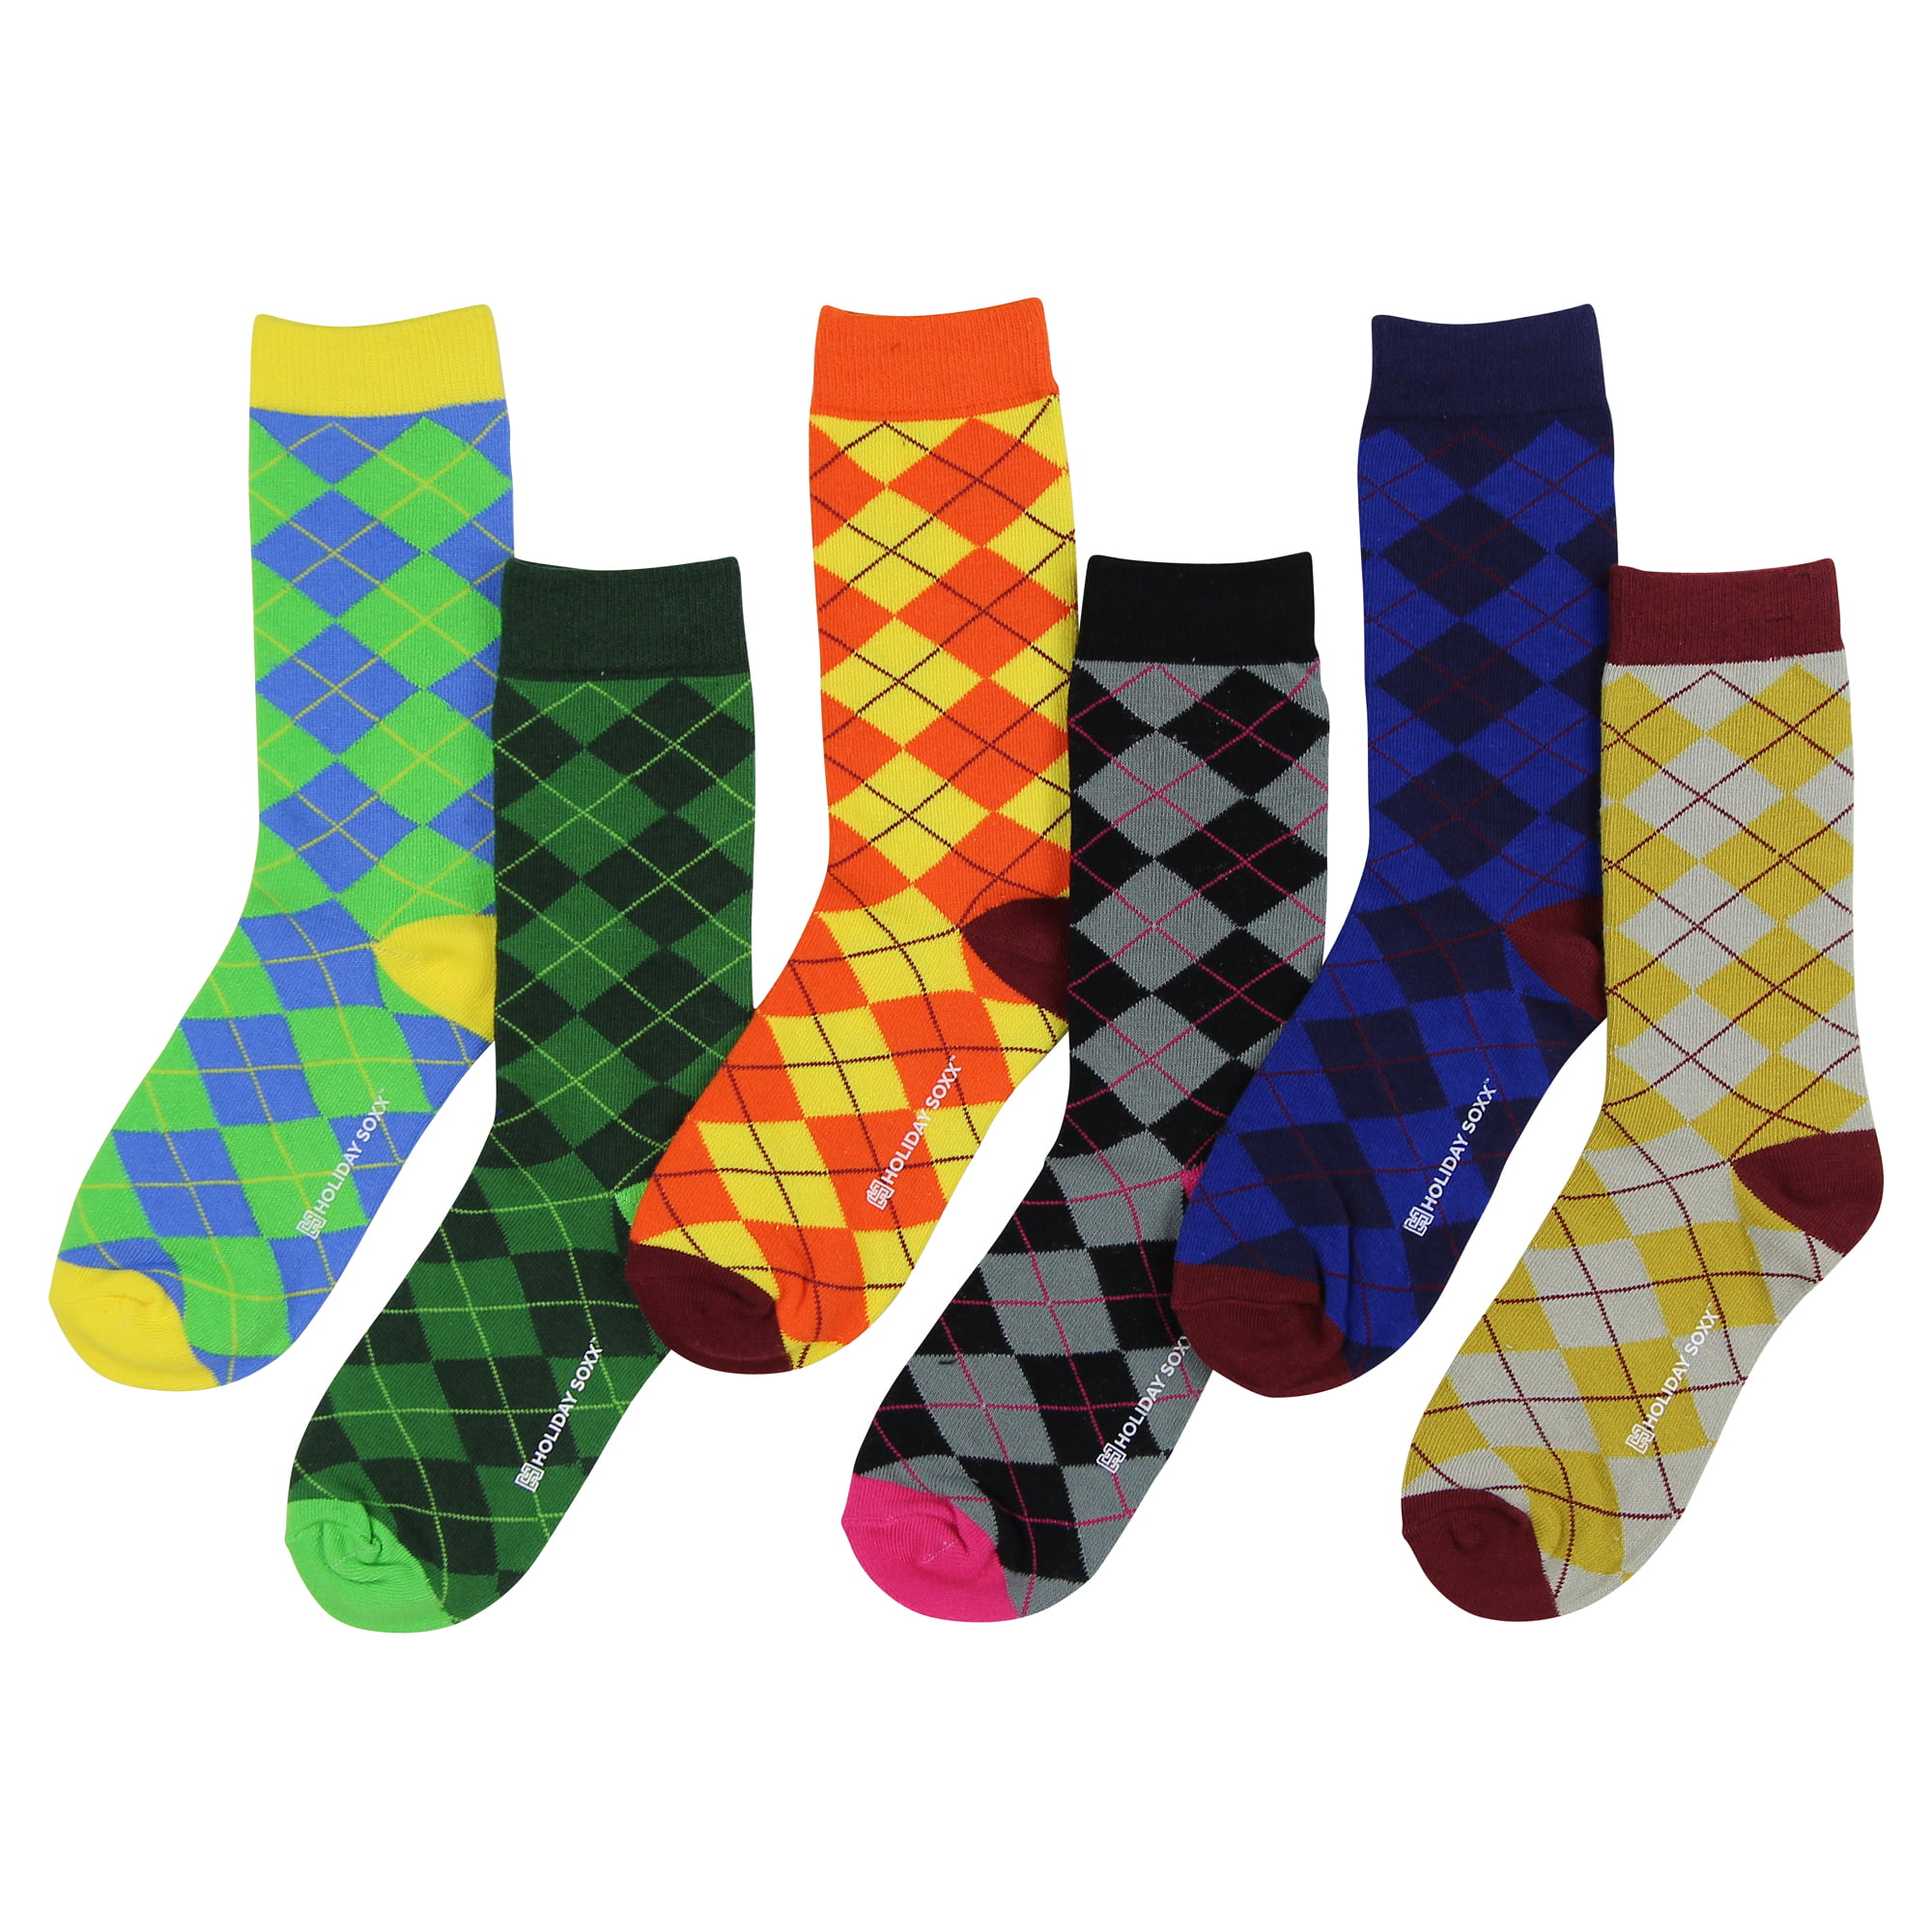 Funny Socks For Female Sox Summer,Traditional Vacation Theme,socks for men 